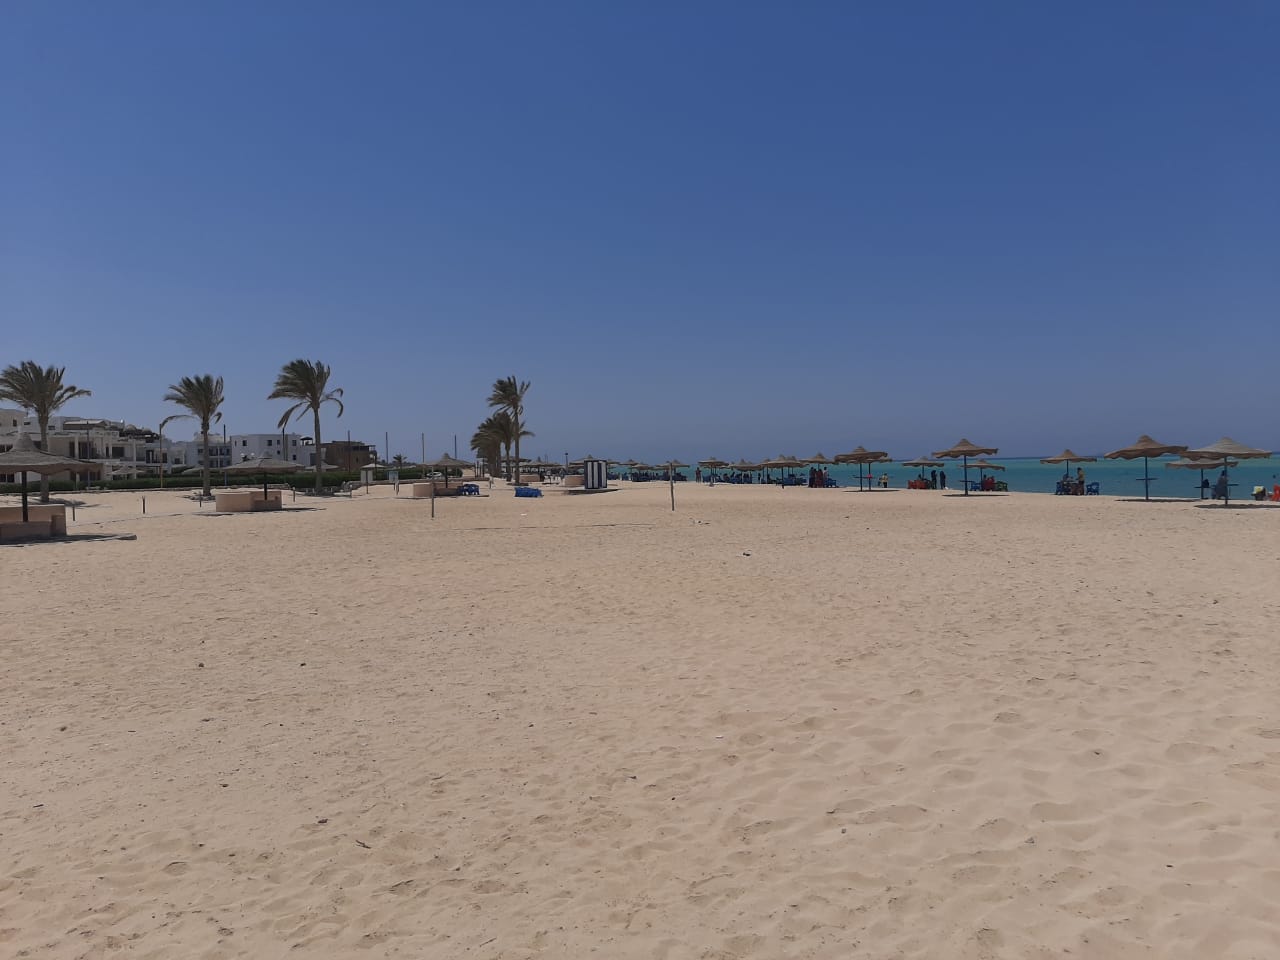 Fotografija Ras Sidr beach nahaja se v naravnem okolju